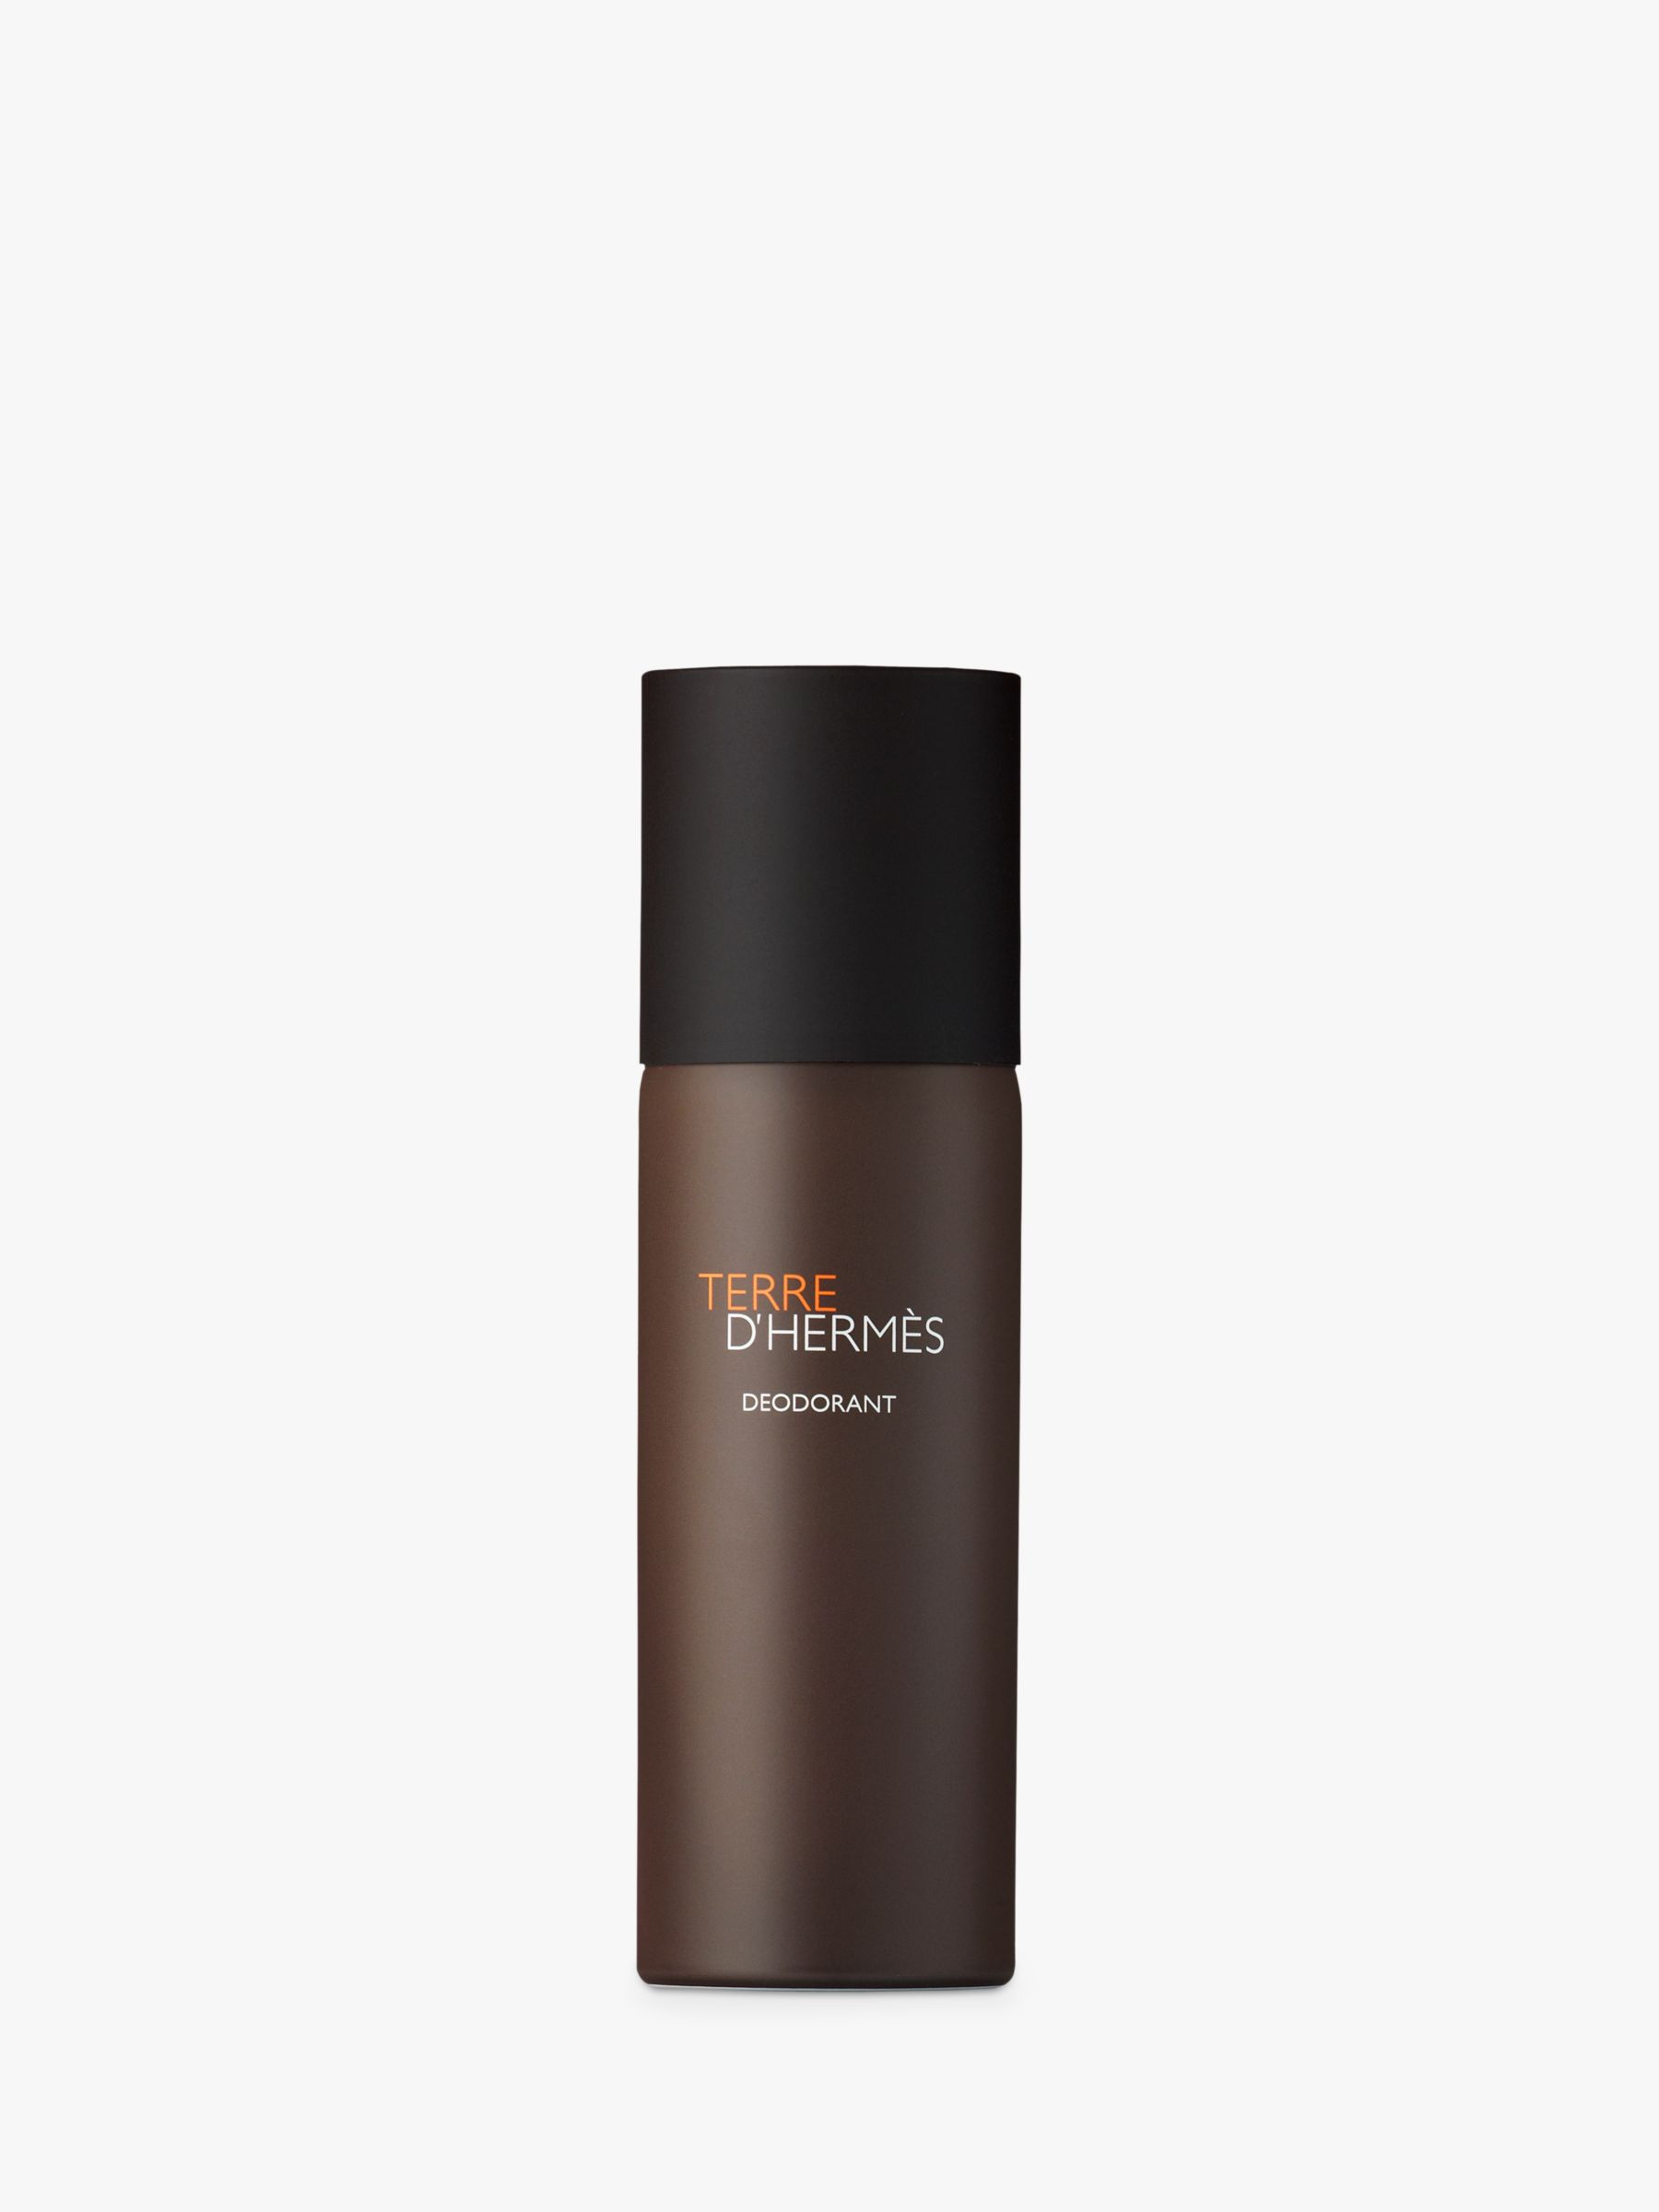 Hermès Terre d'Hermès Deodorant Spray, 150ml